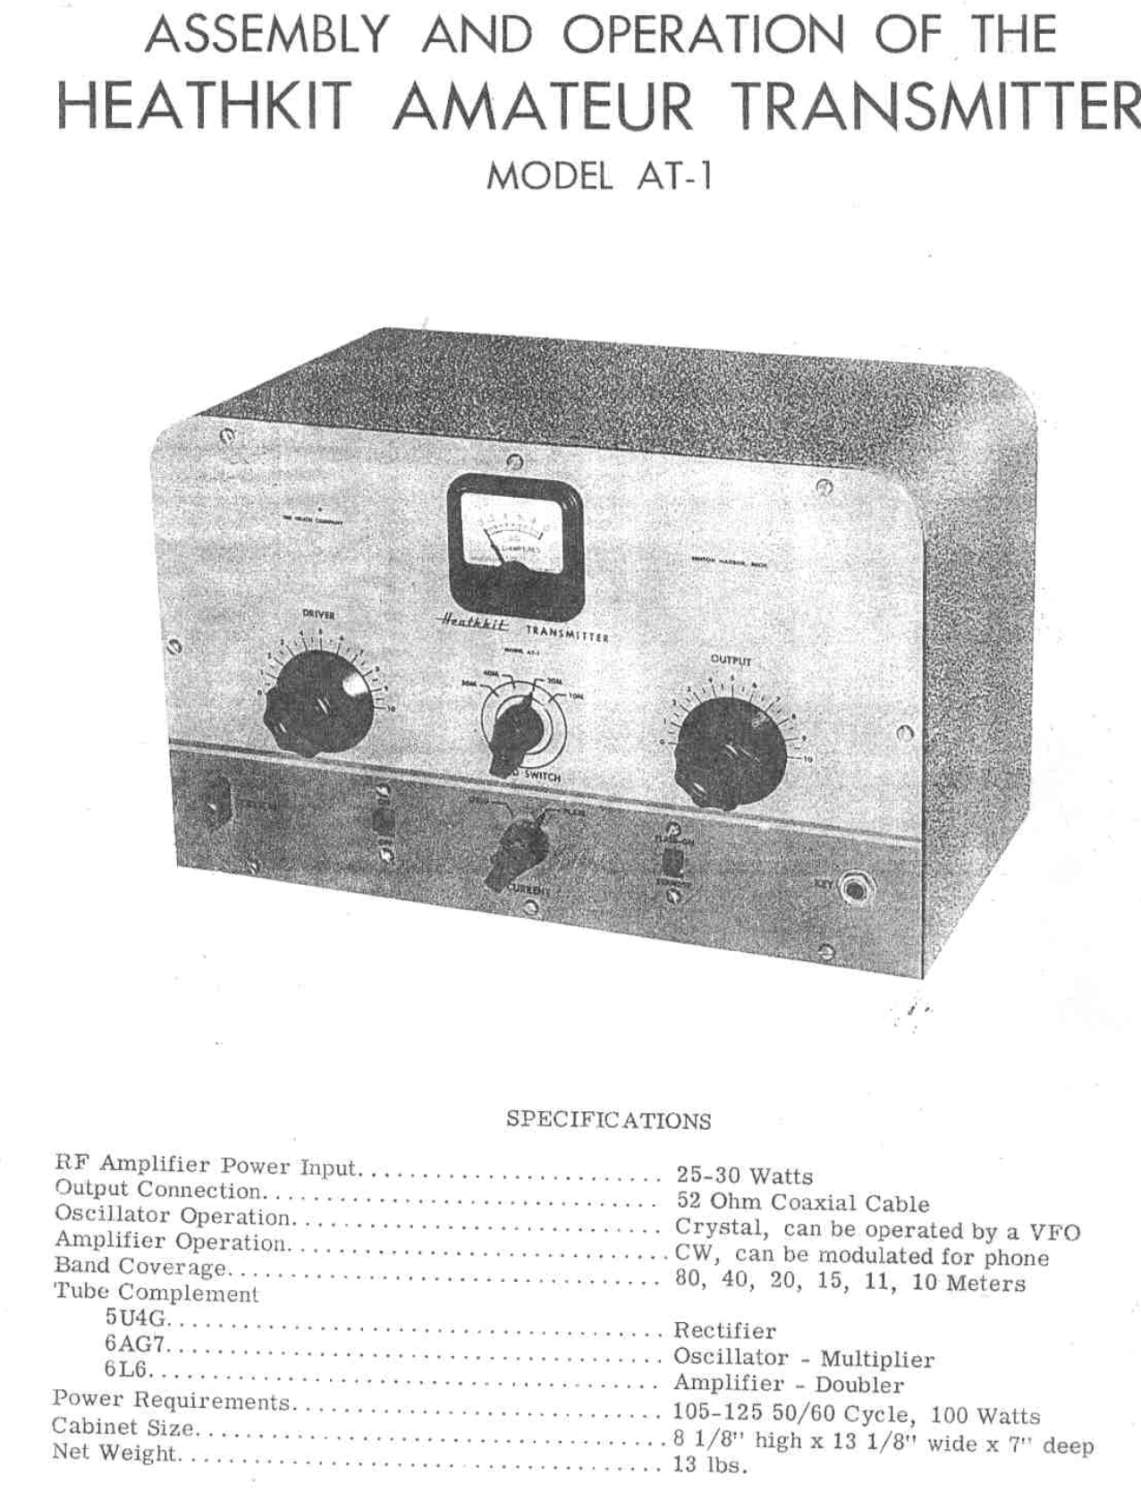 Heathkit AT-1 Amateur Transmitter - Assembly Instructions